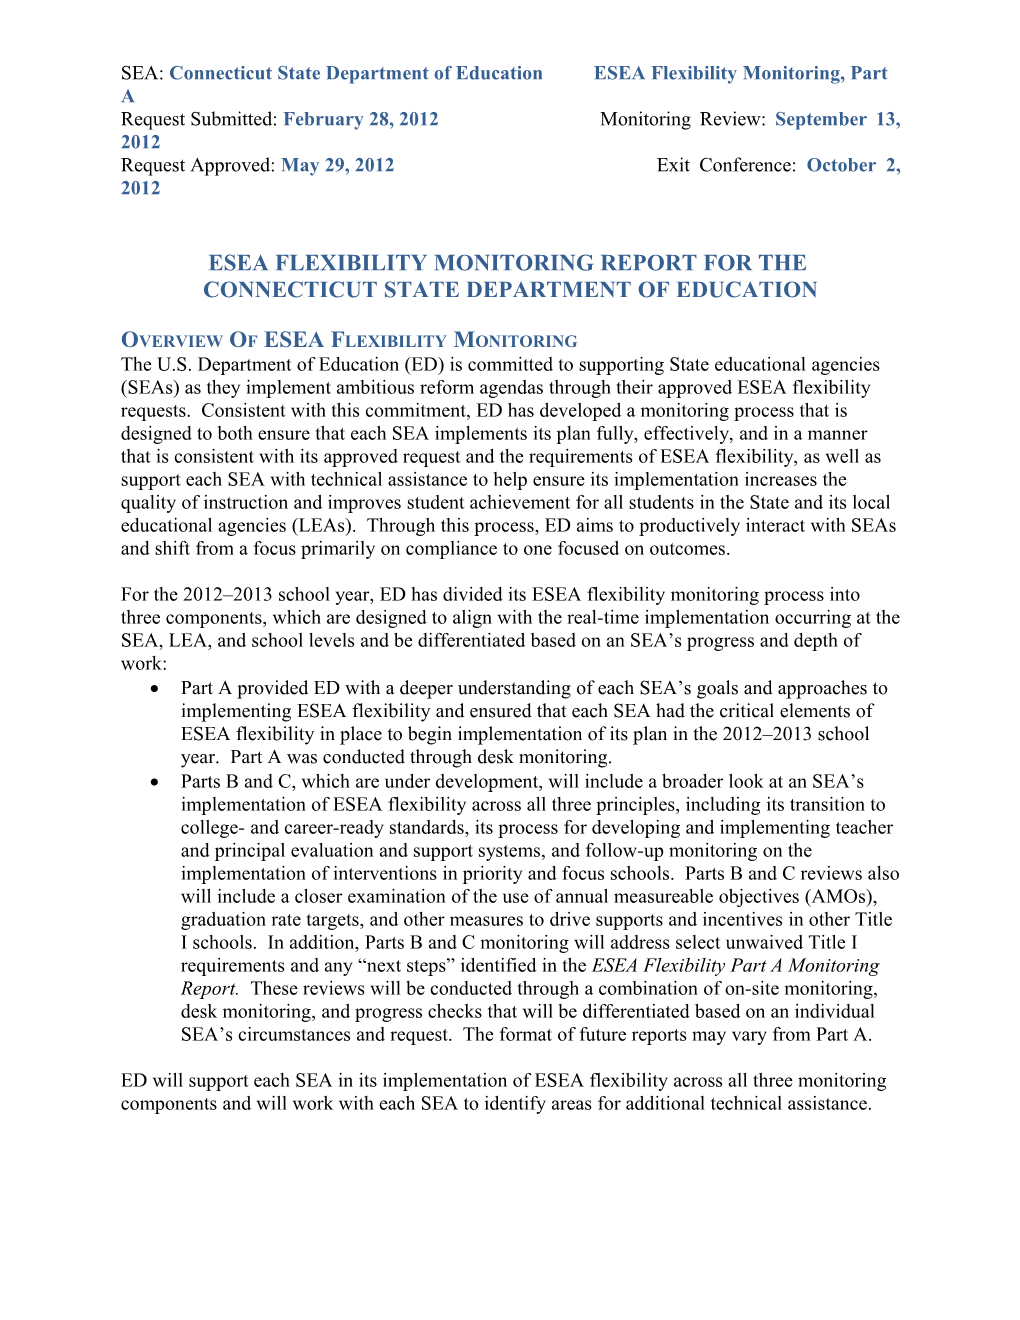 Connecticut ESEA Flexibility Monitoring Report Part A